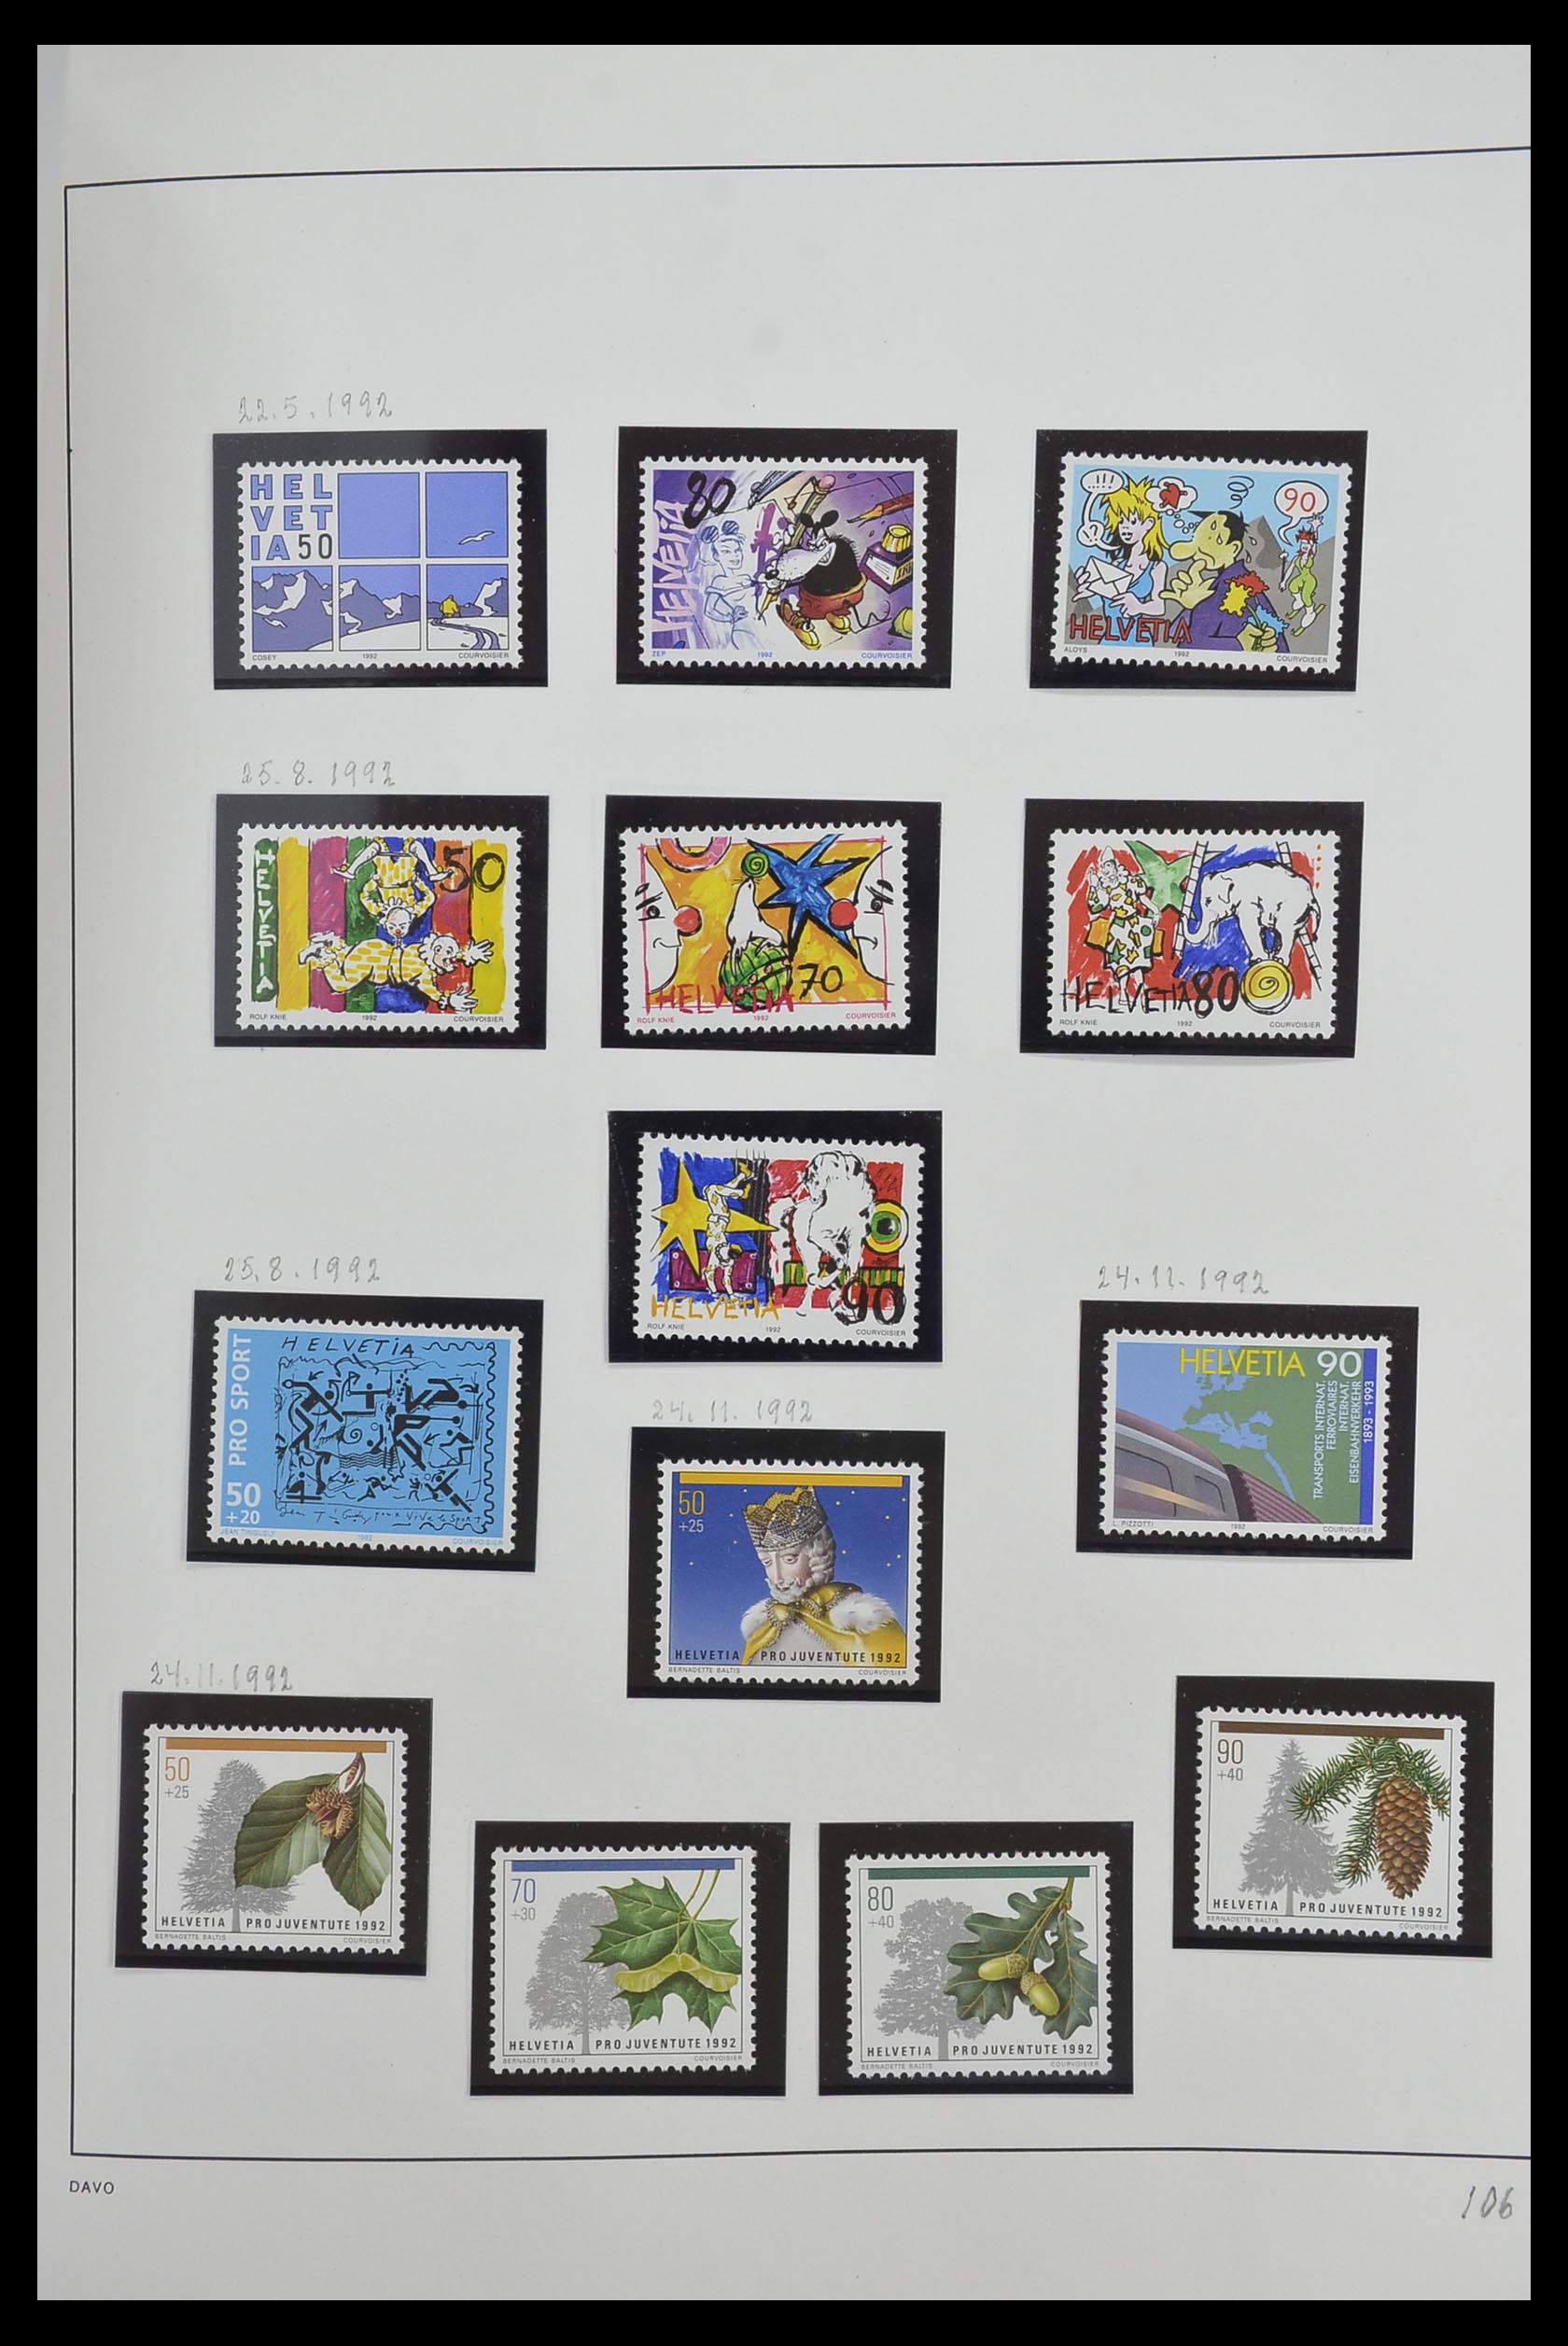 33556 108 - Stamp collection 33556 Switzerland 1862-2000.